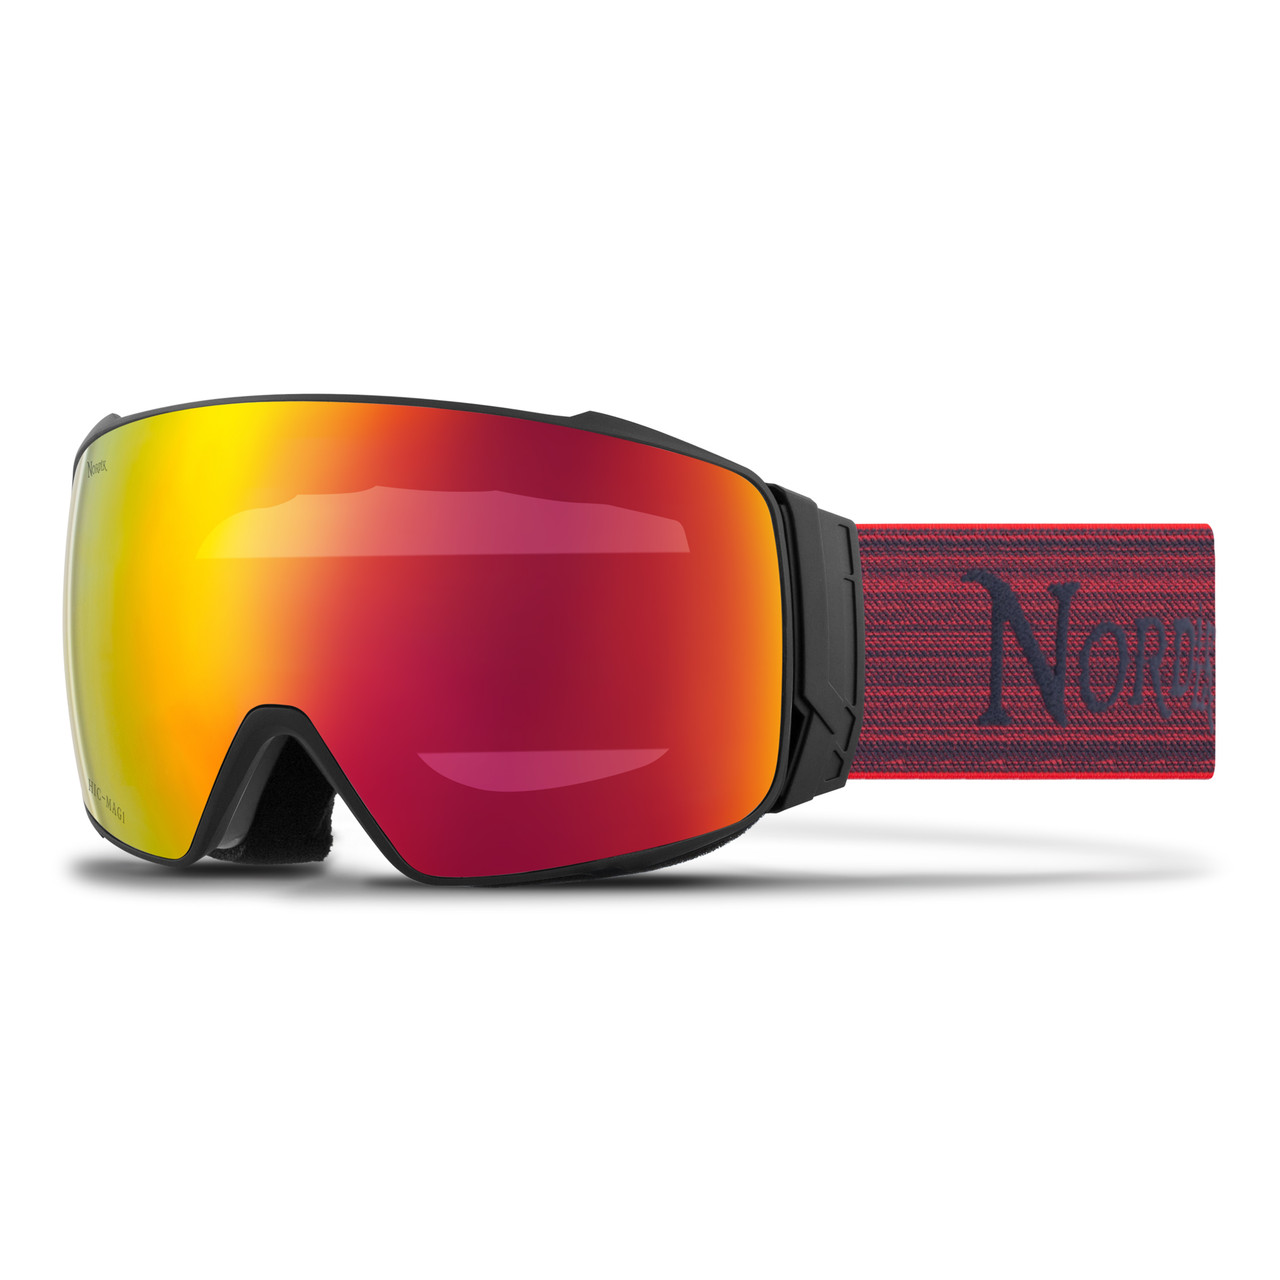 Nordik Torsten Magnetic Ski Goggles - Matte Black Frame and Red Mirrored Lens - Goggles N More